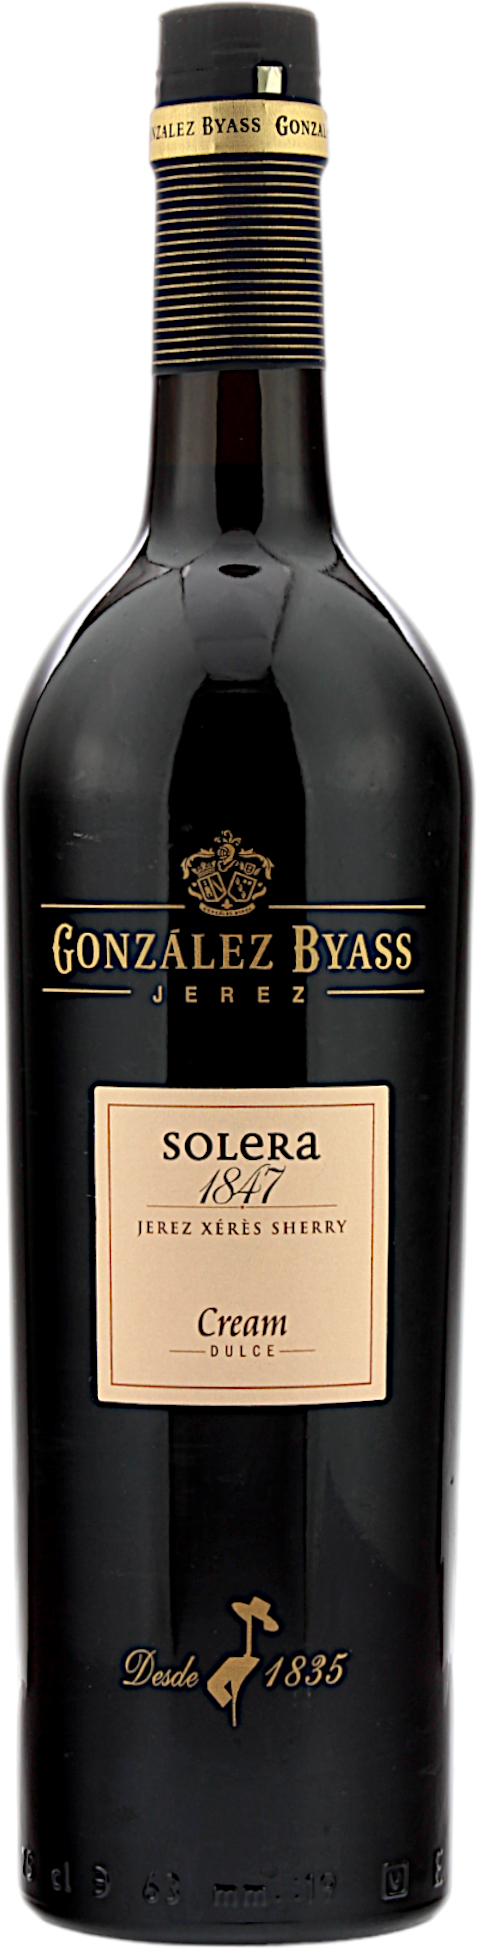 Gonzales Byass Solera 1847 Cream 18.0% 0,75l